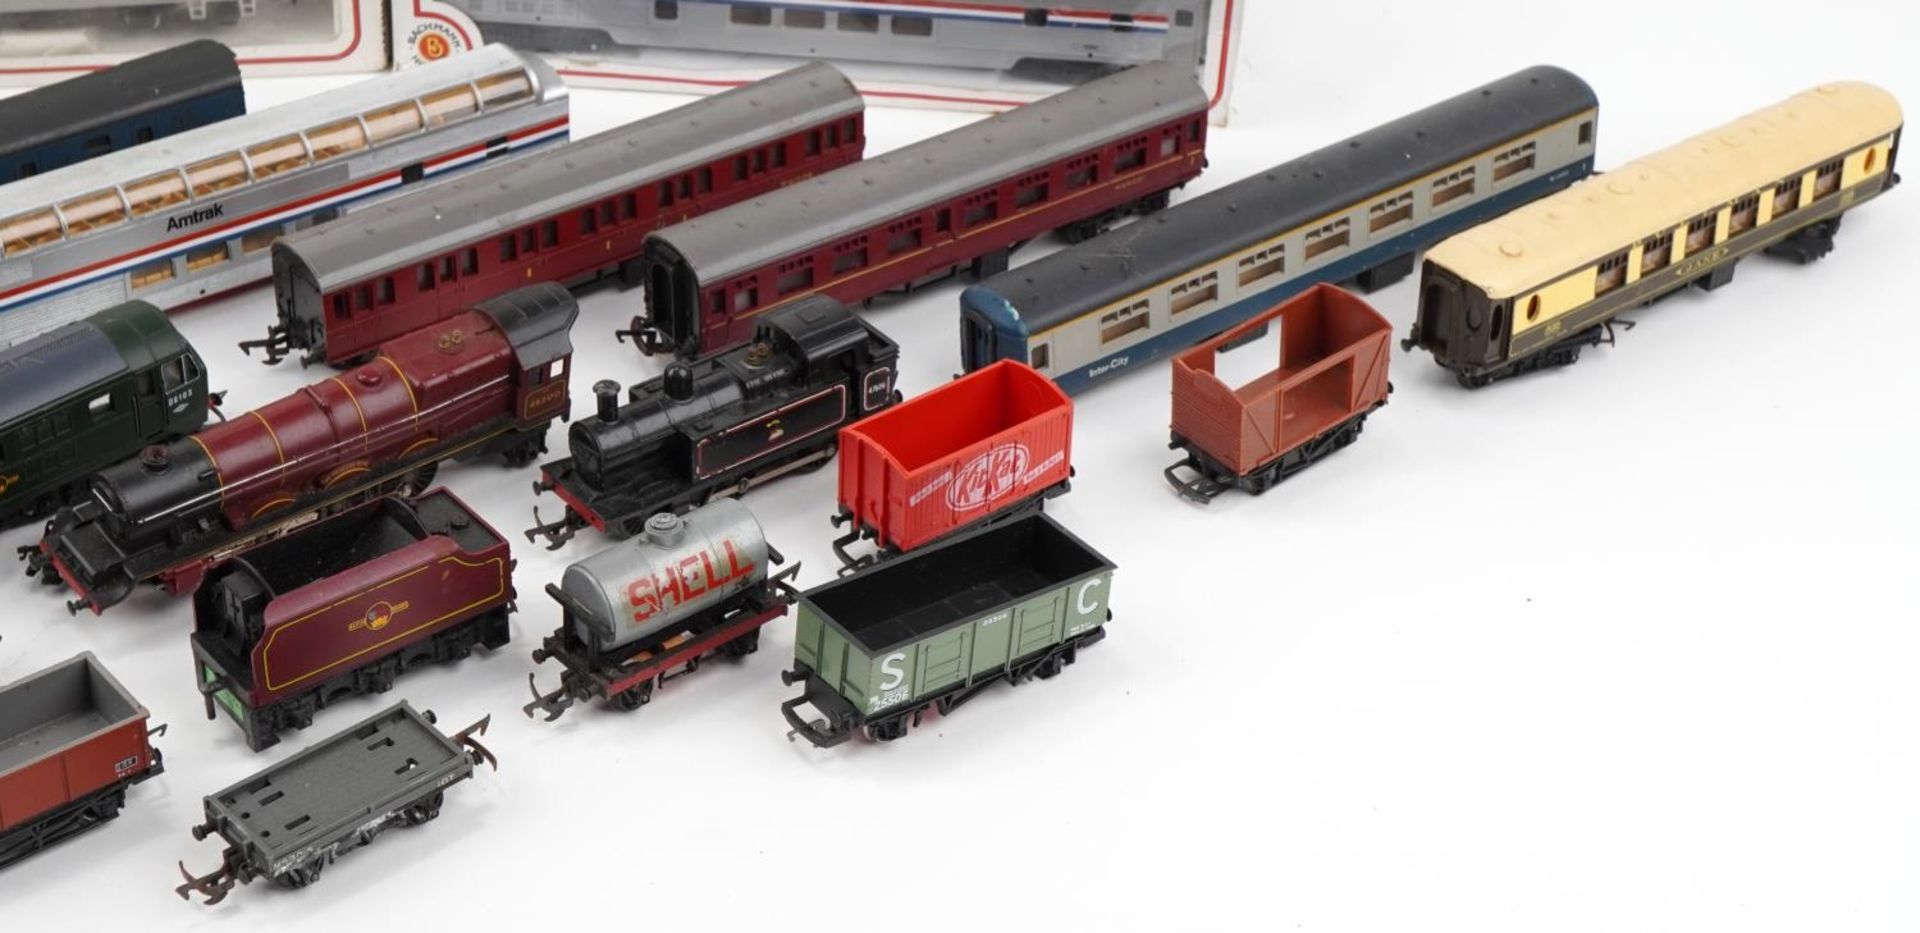 OO gauge model railway including Tri-ang The Princess Royal locomotive with tender, Lima Royal Scots - Image 4 of 4